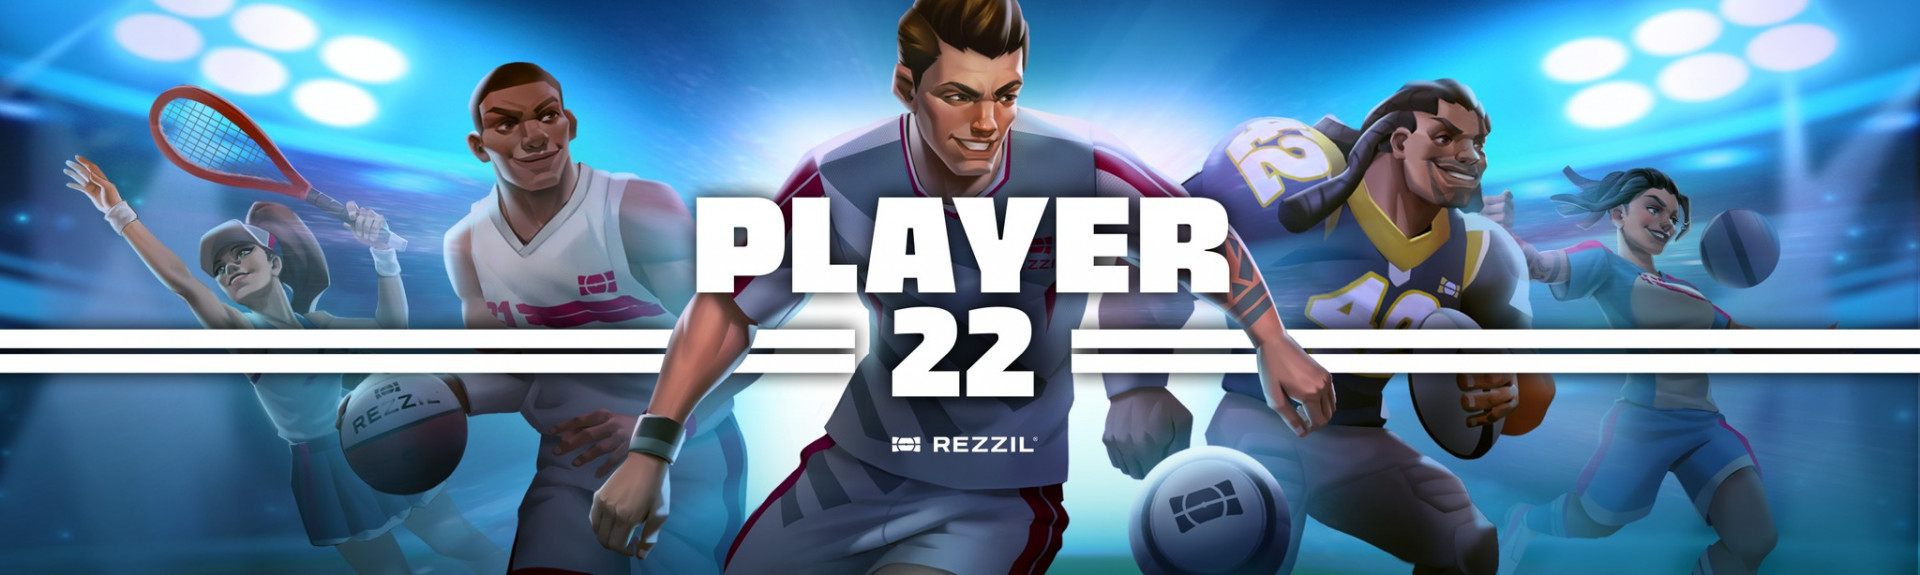 Player 22 by Rezzil